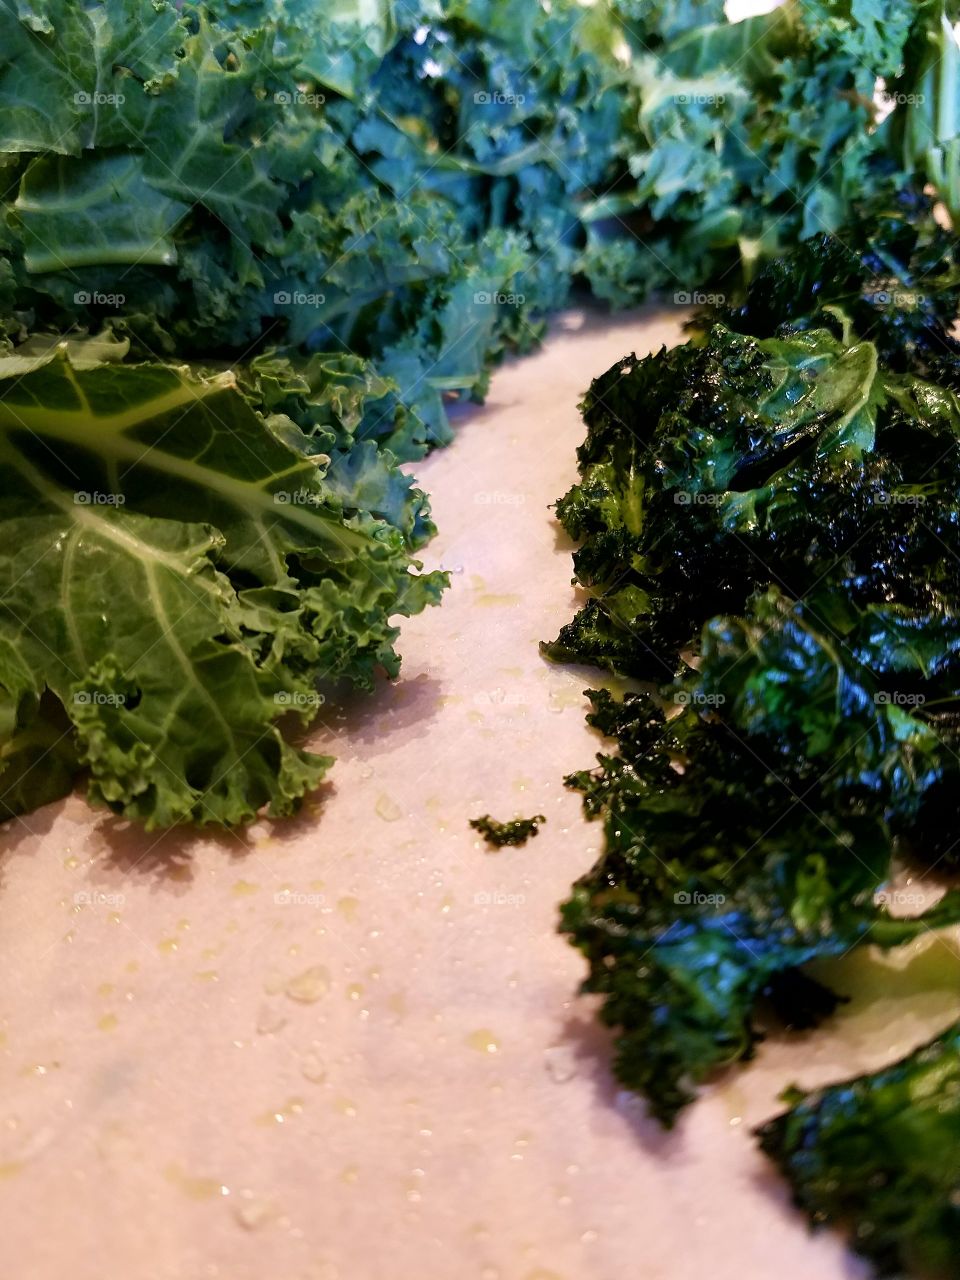 fresh kale alongside kale crispy chips, health food.